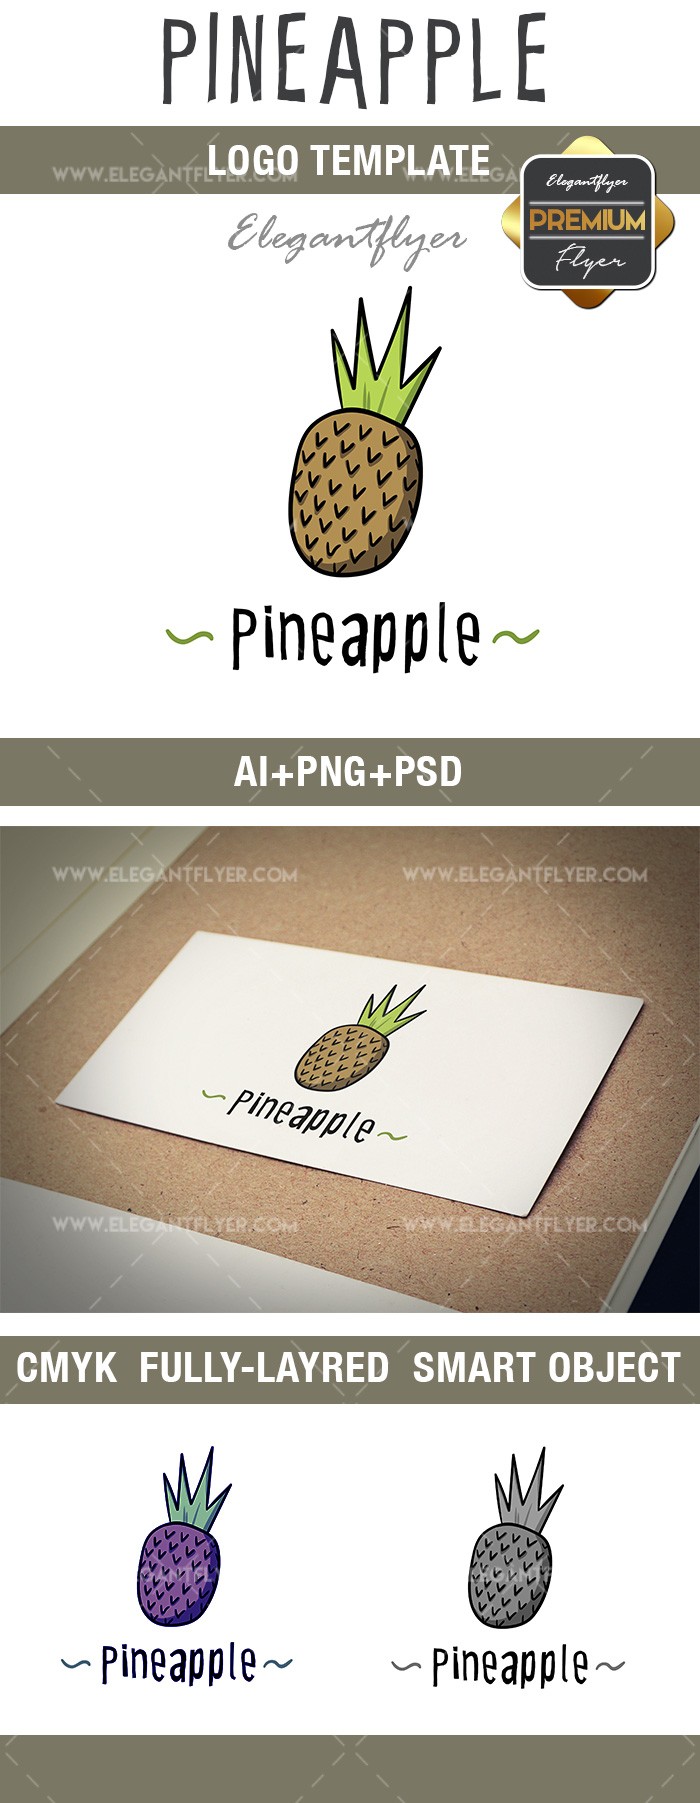 Pineapple by ElegantFlyer